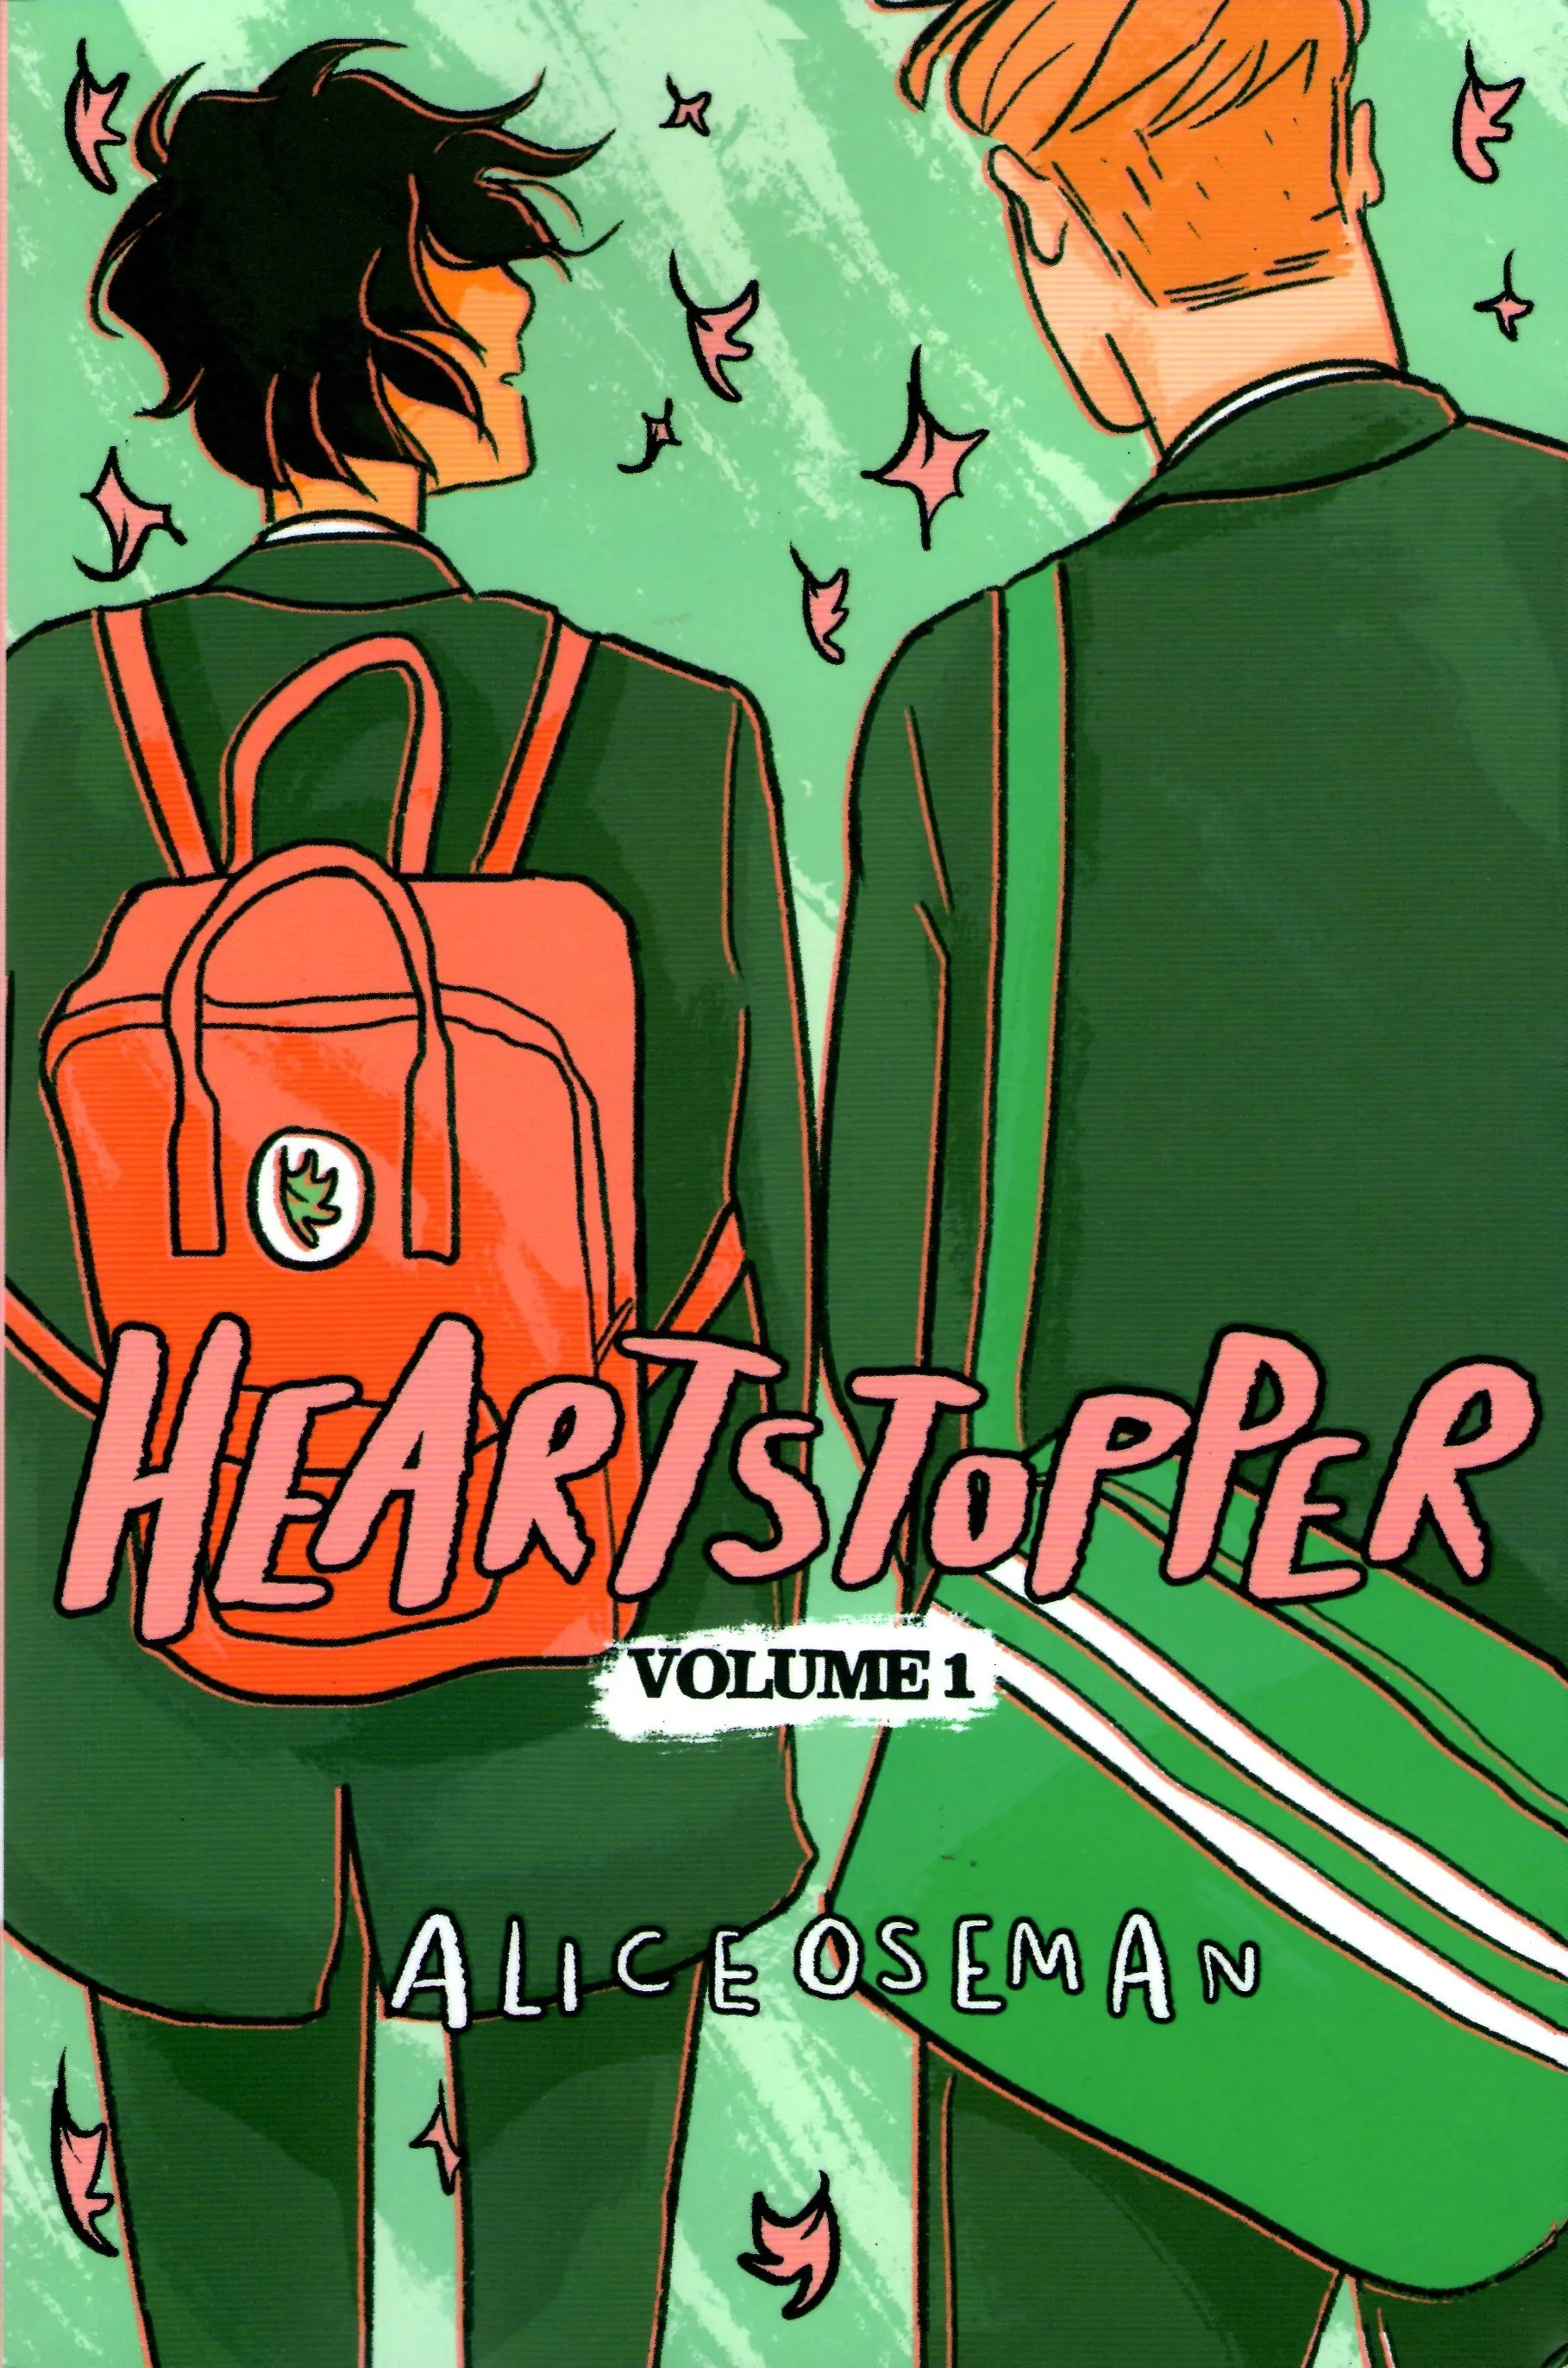 Heartstopper: Volume One